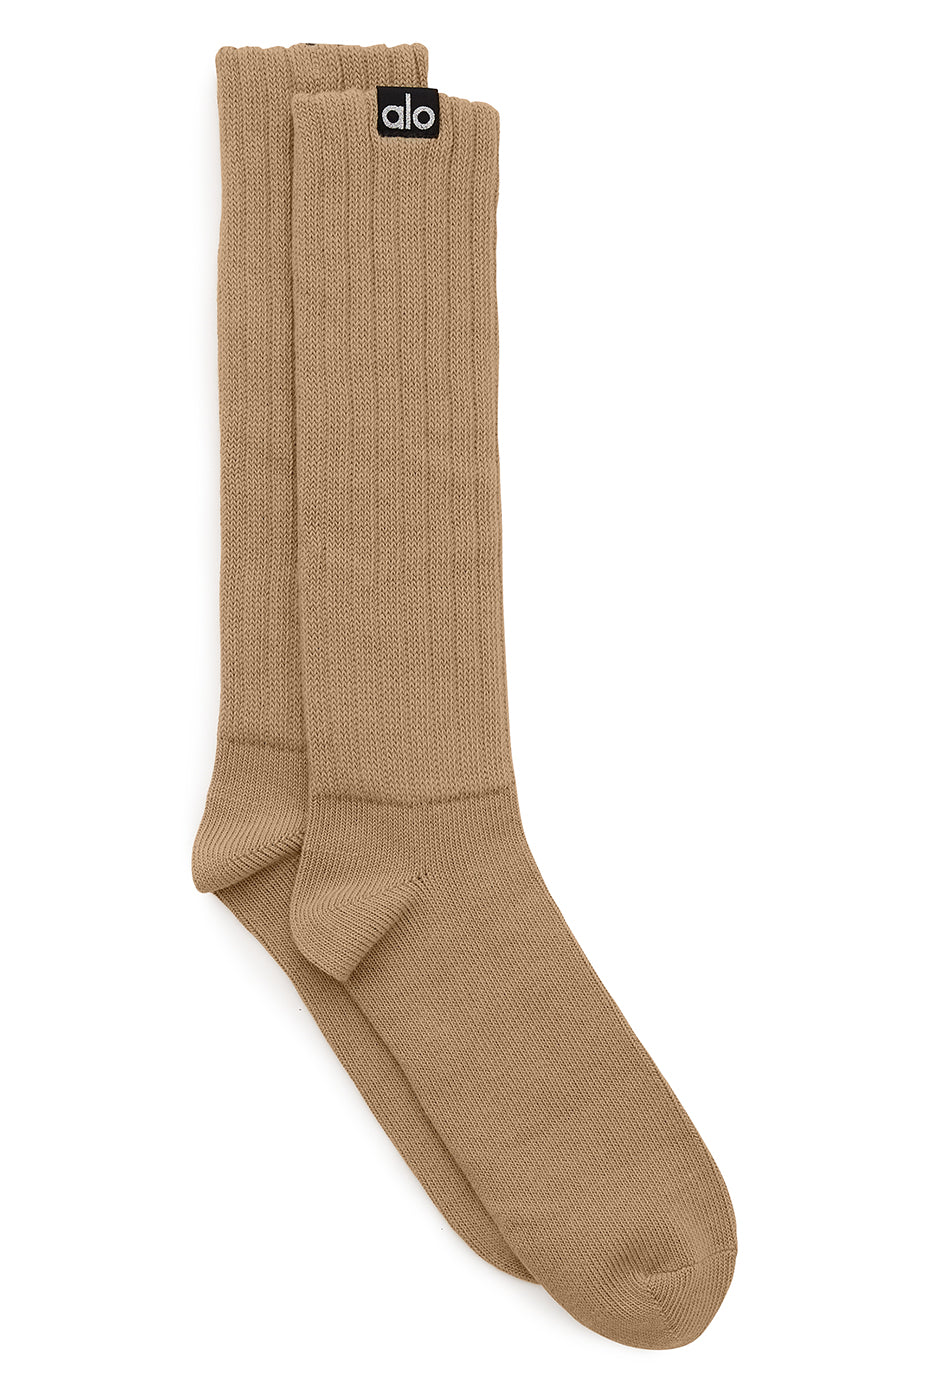 Alo Yoga scrunch socks, throwback socks new. Selling as bundle.